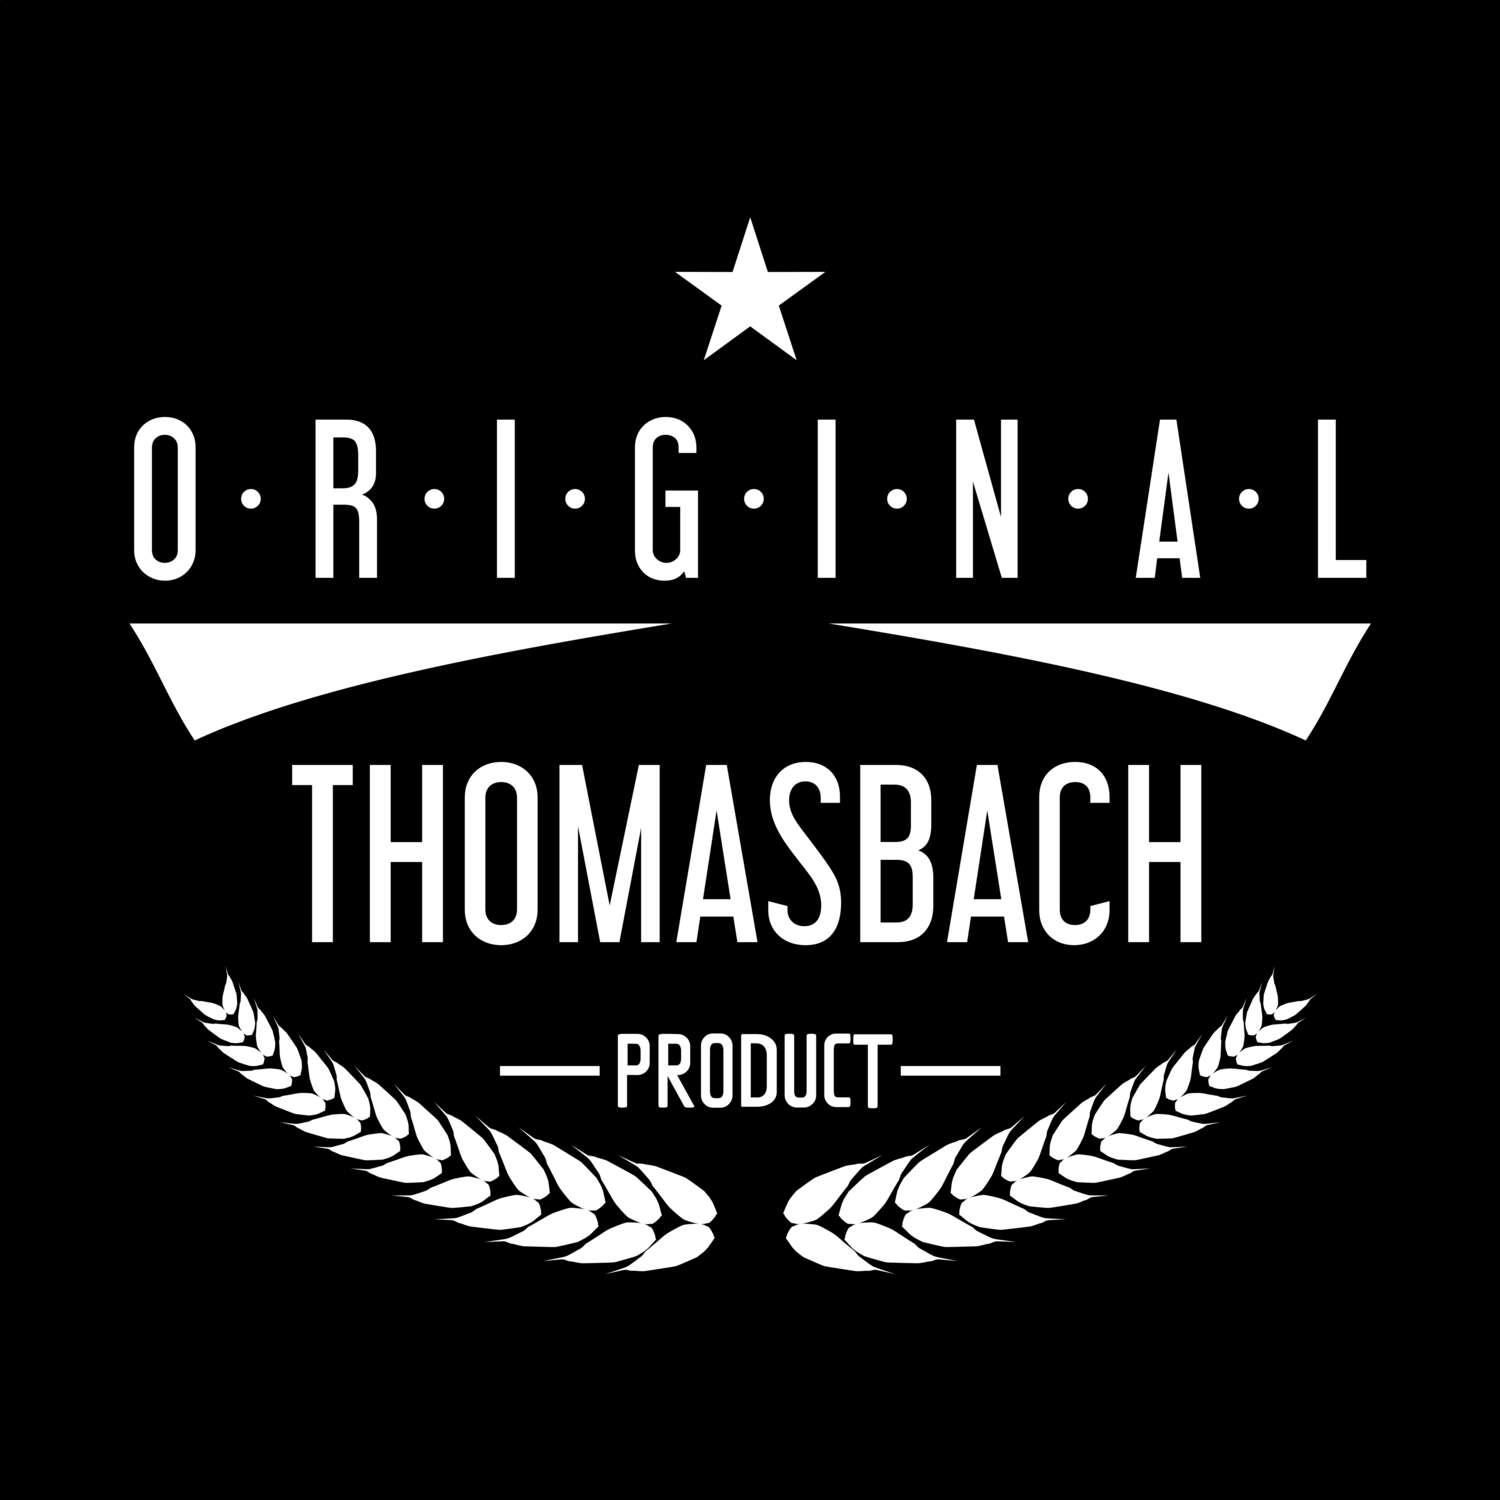 Thomasbach T-Shirt »Original Product«